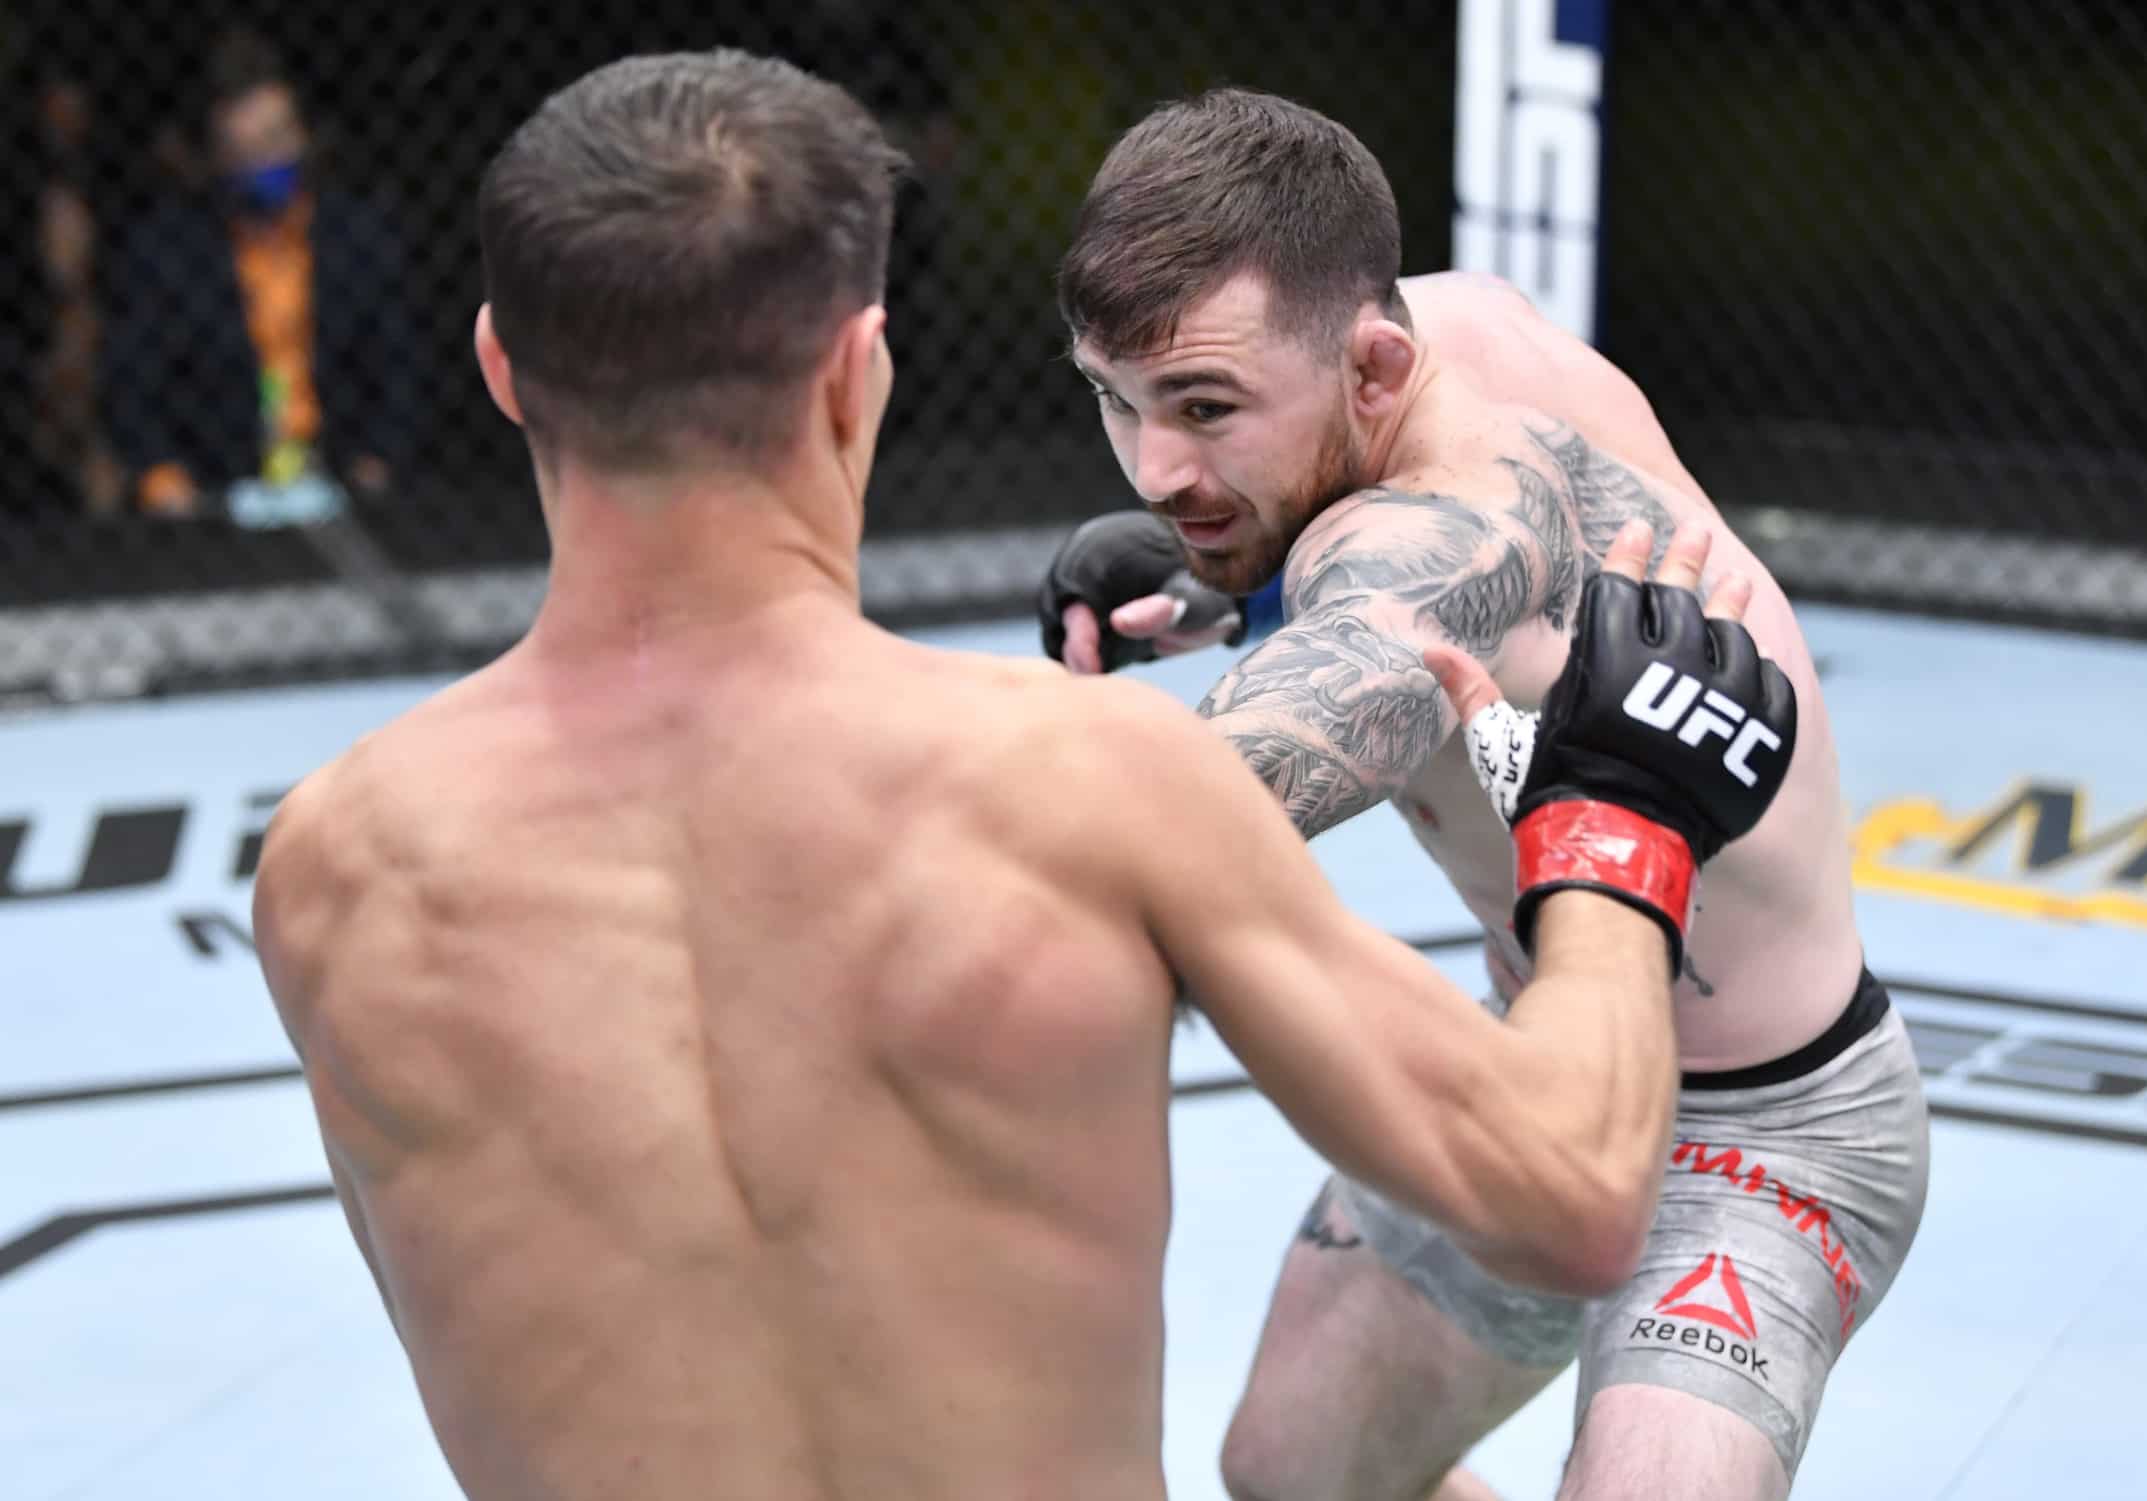 Man dodges punch during a UFC bout